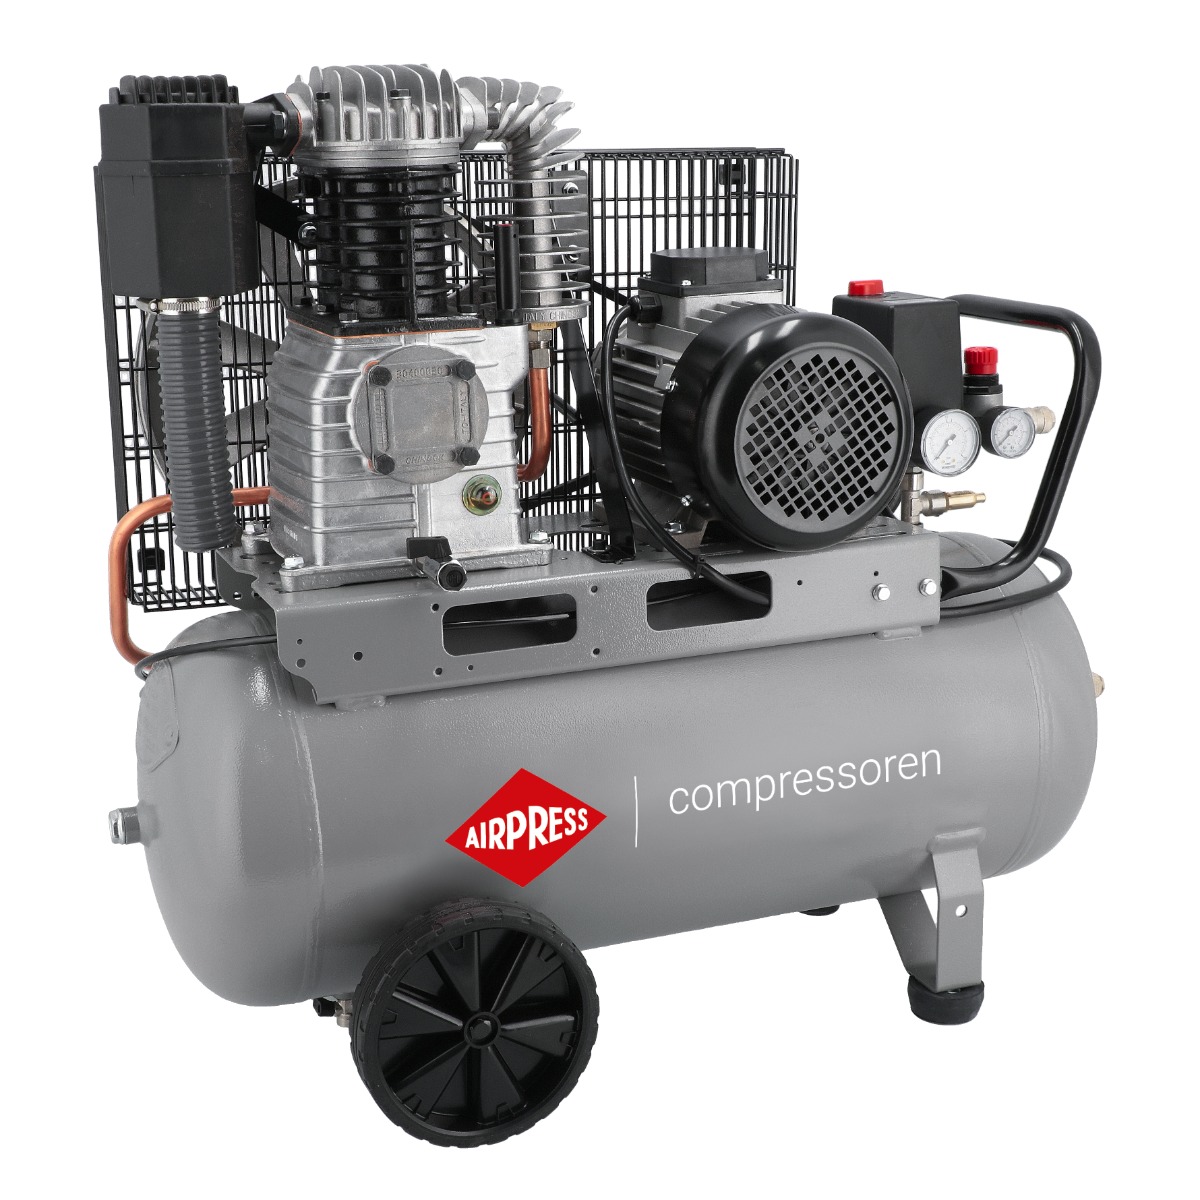 Compresor de aire de una etapa profesional HK 425-50